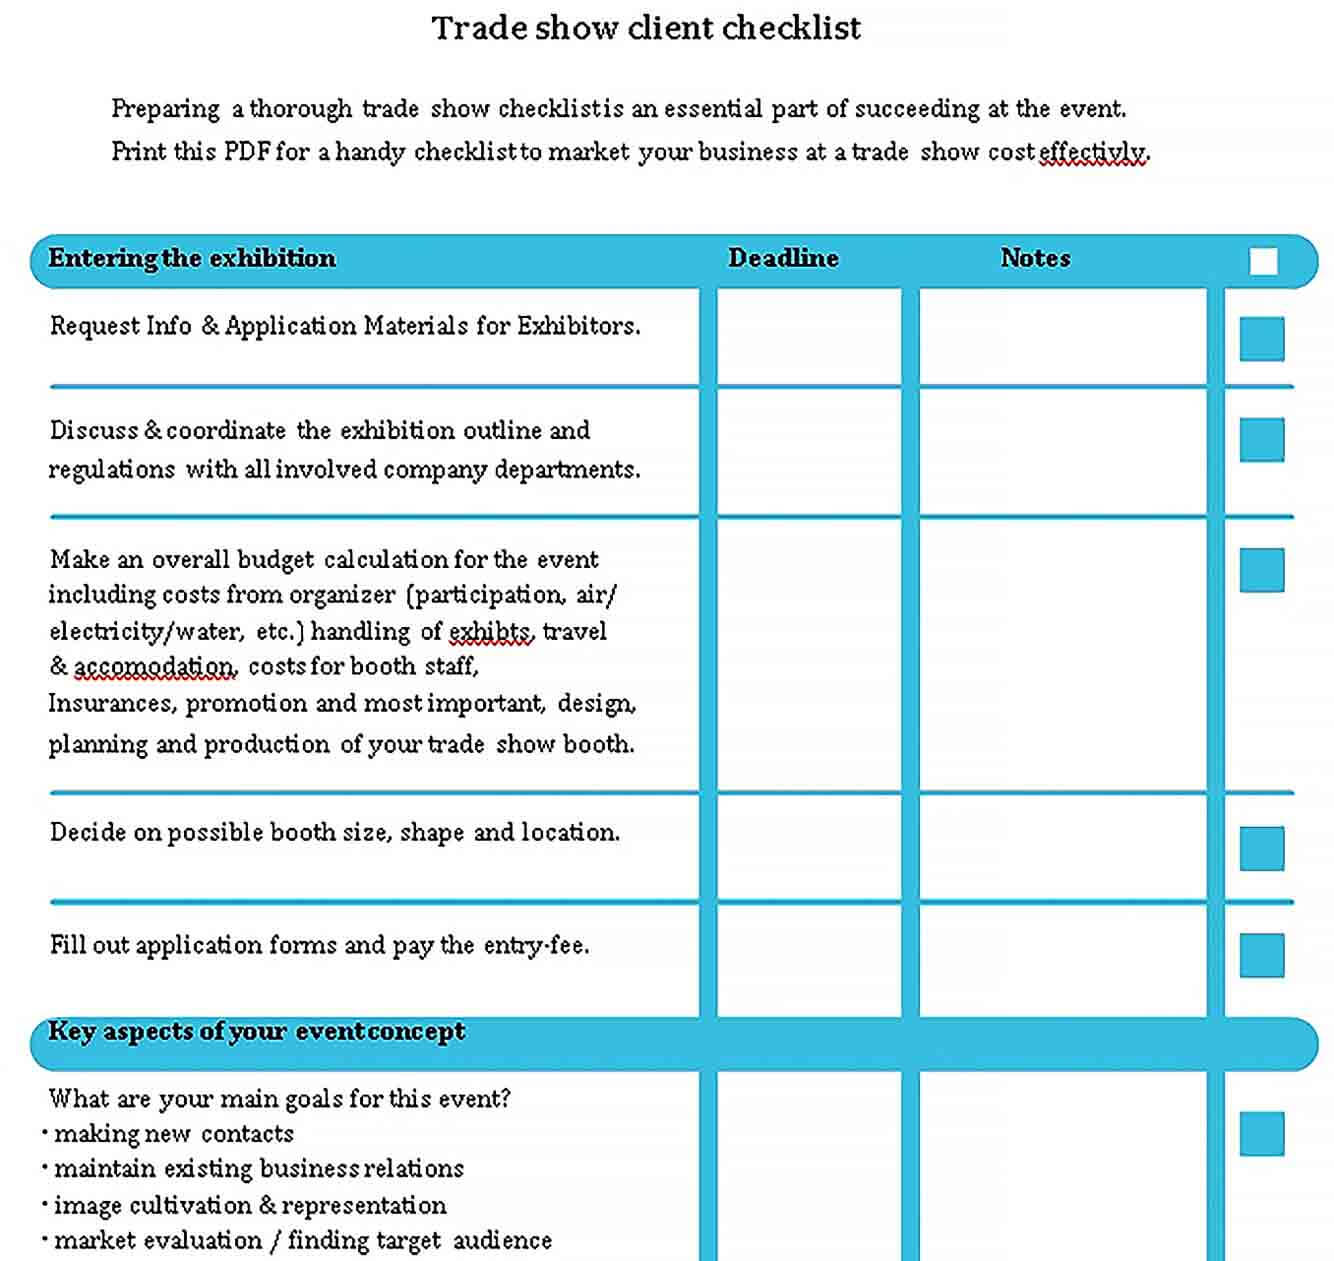 Sample Trade show client checklist